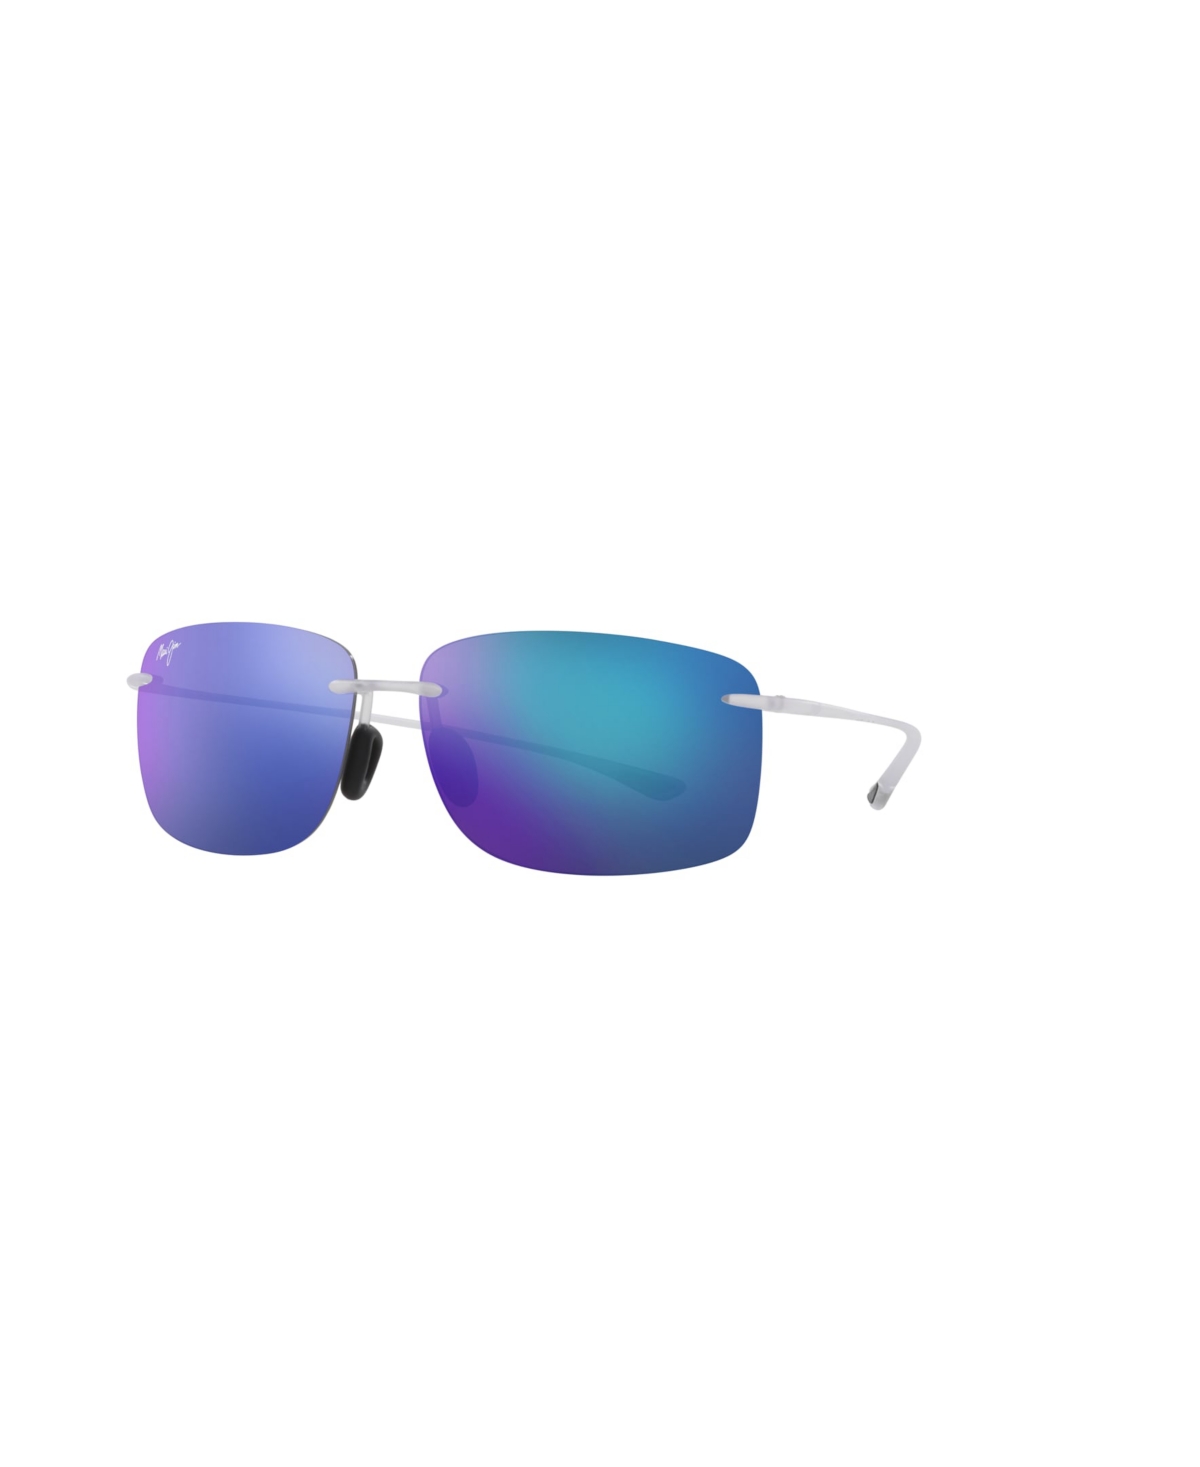 Maui Jim Unisex Sunglasses, B443-05cm Mj000643 In Crystal Matte